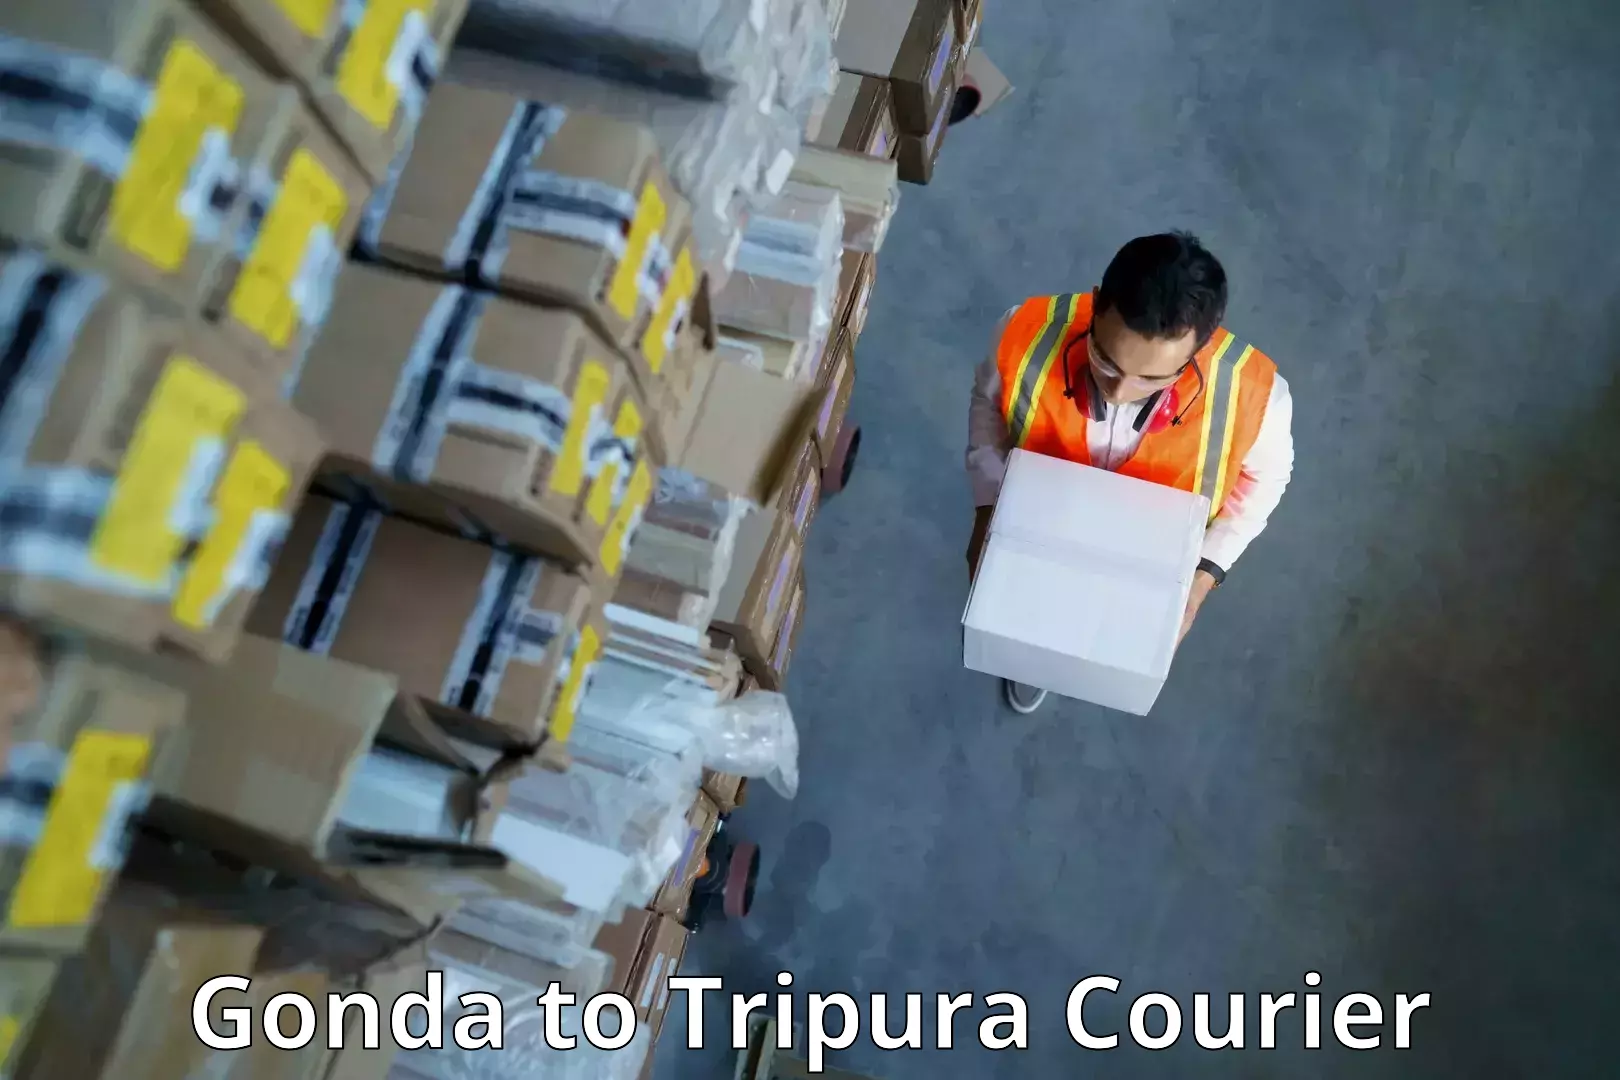 Efficient order fulfillment Gonda to Tripura